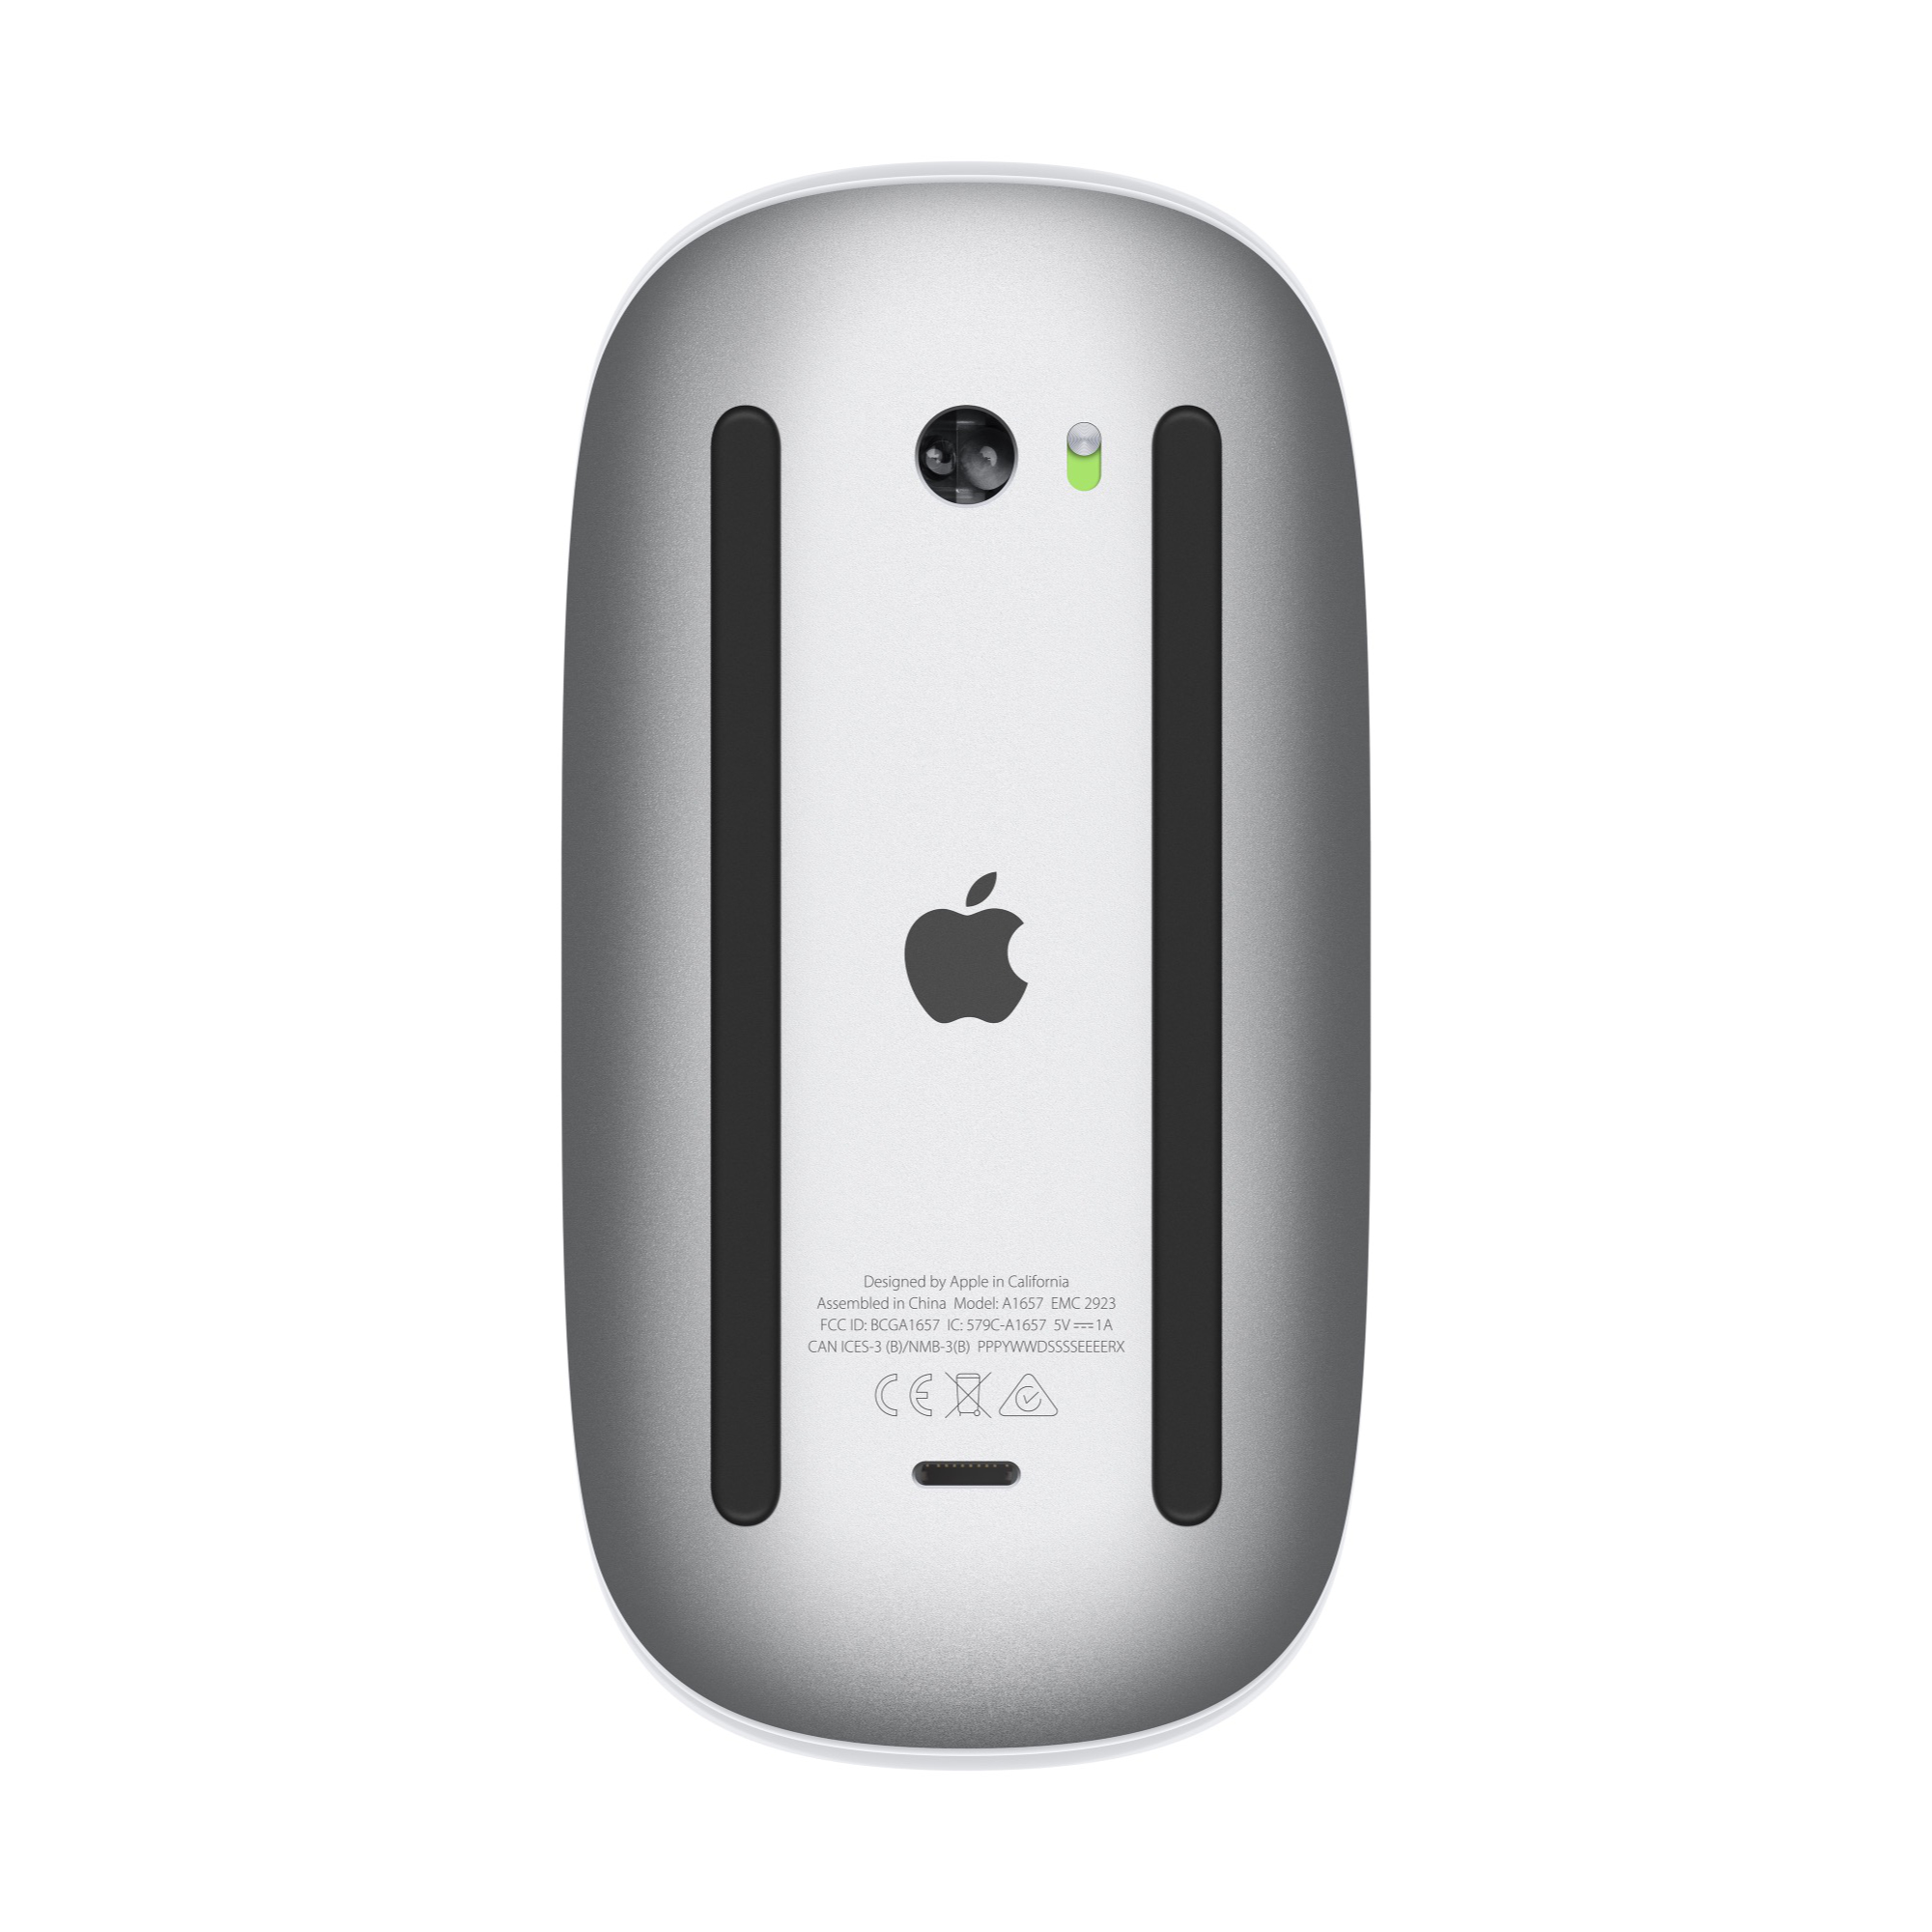 APPLE Magic Mouse – fehér Multi-Touch felület